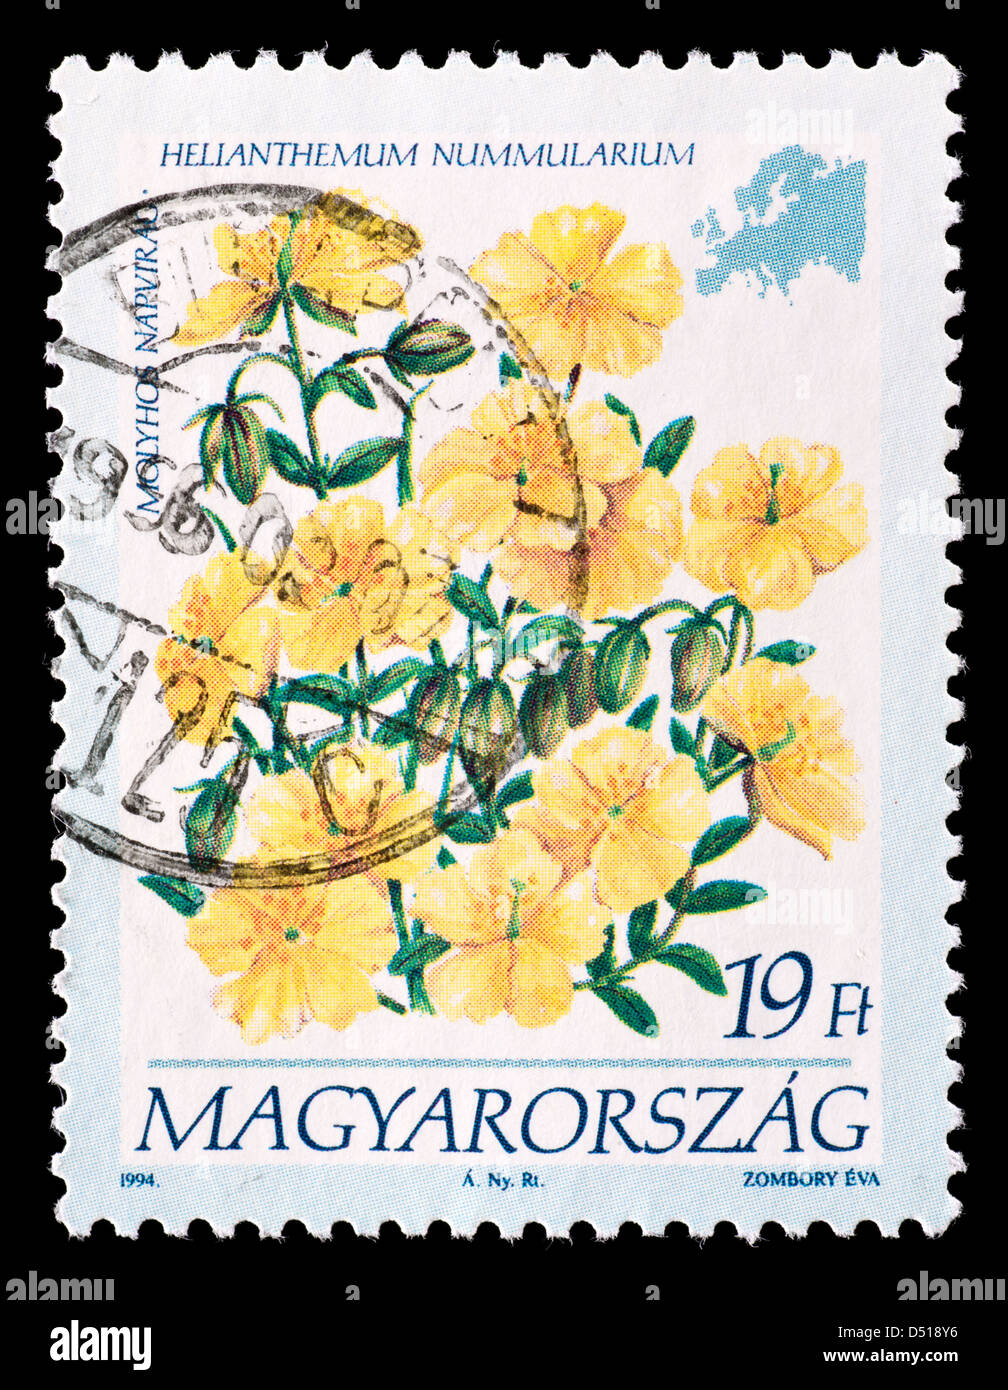 Postage stamp from Hungary depicting Common Rockrose flower (Helianthemum nummularium) Stock Photo